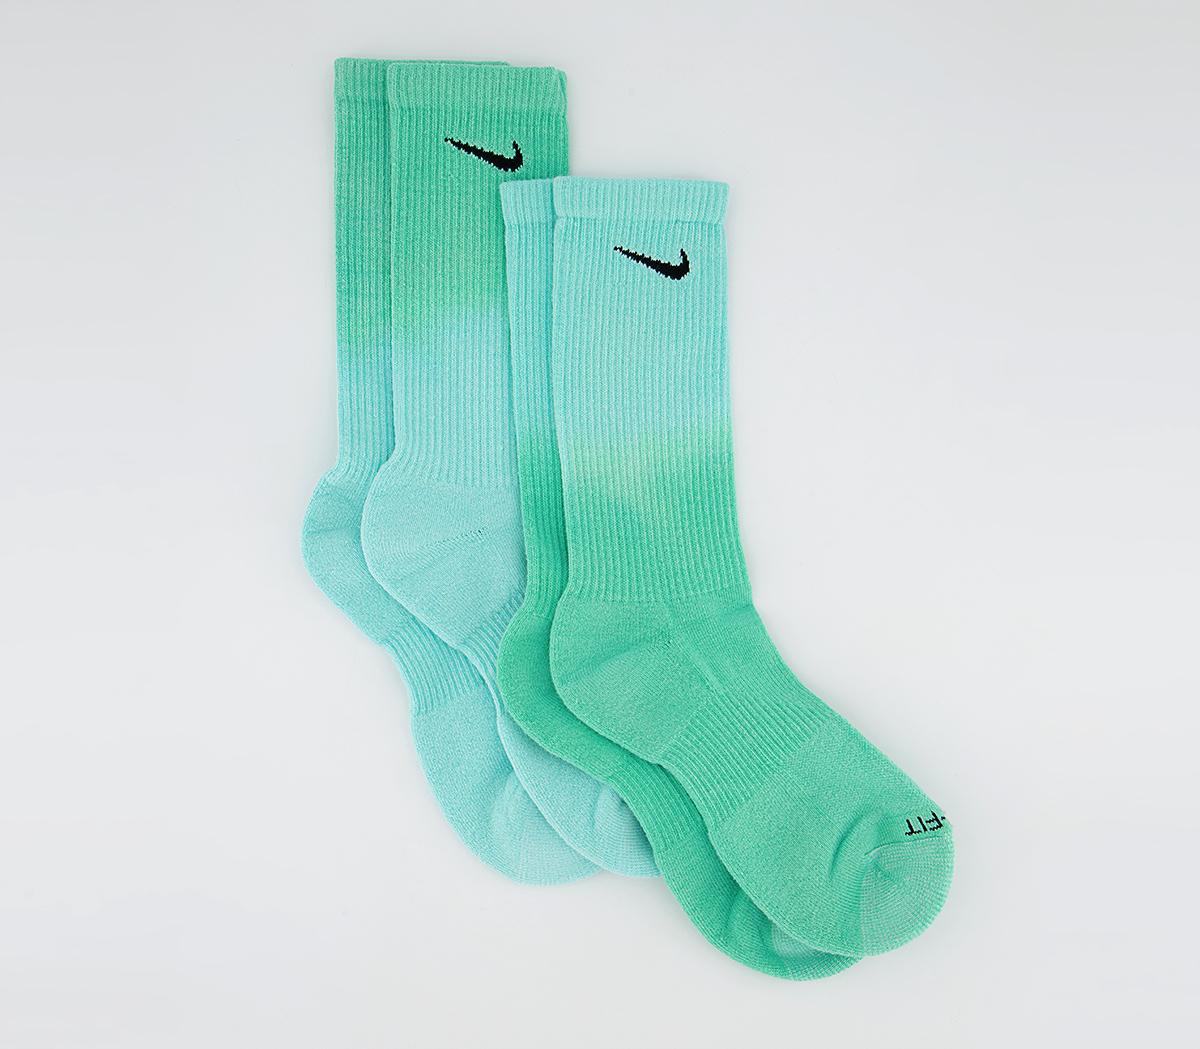 NikeCushioned Tie Dye Crew Socks 2 PairsMulti Colour Blue Green